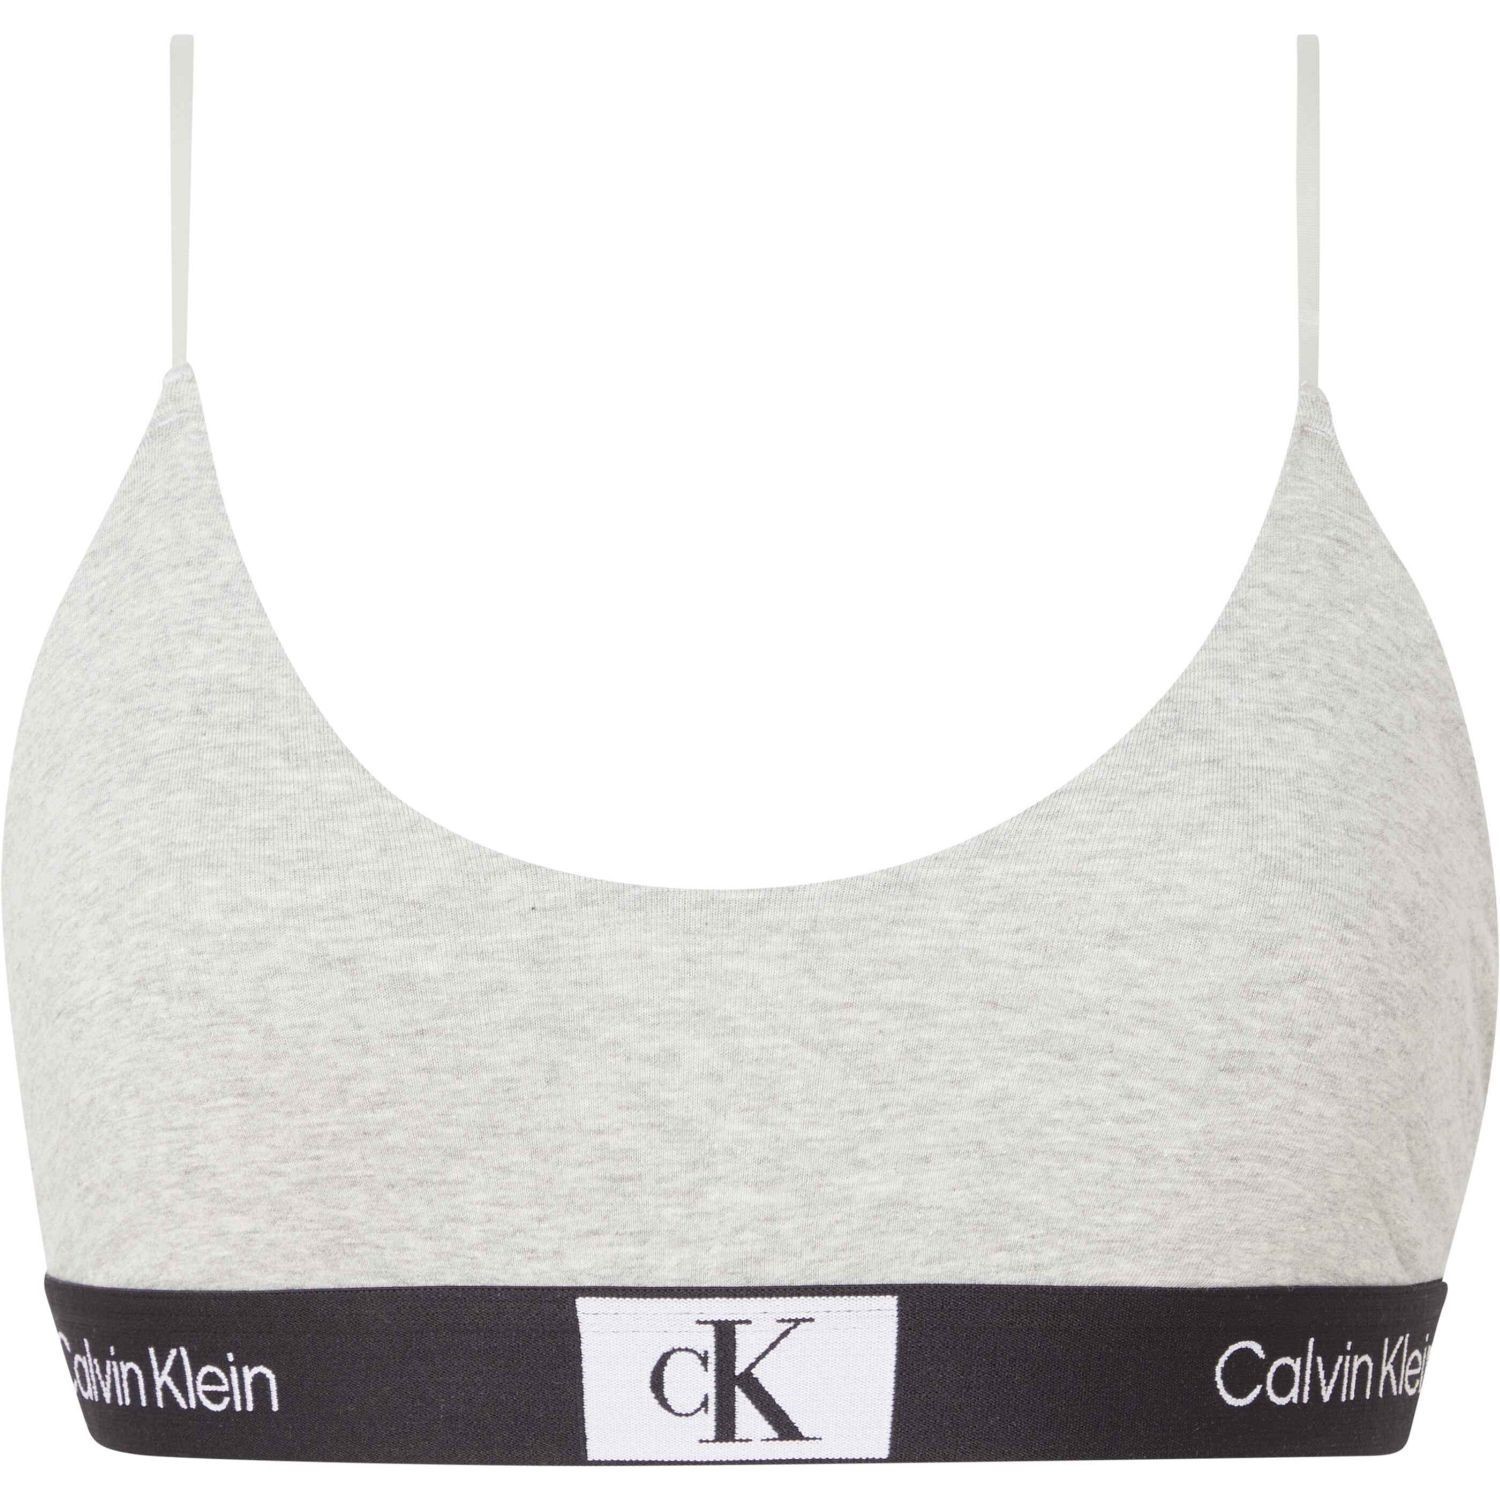 Calvin Klein CK96 Unlined Bralette - Bralette Bras - Bras